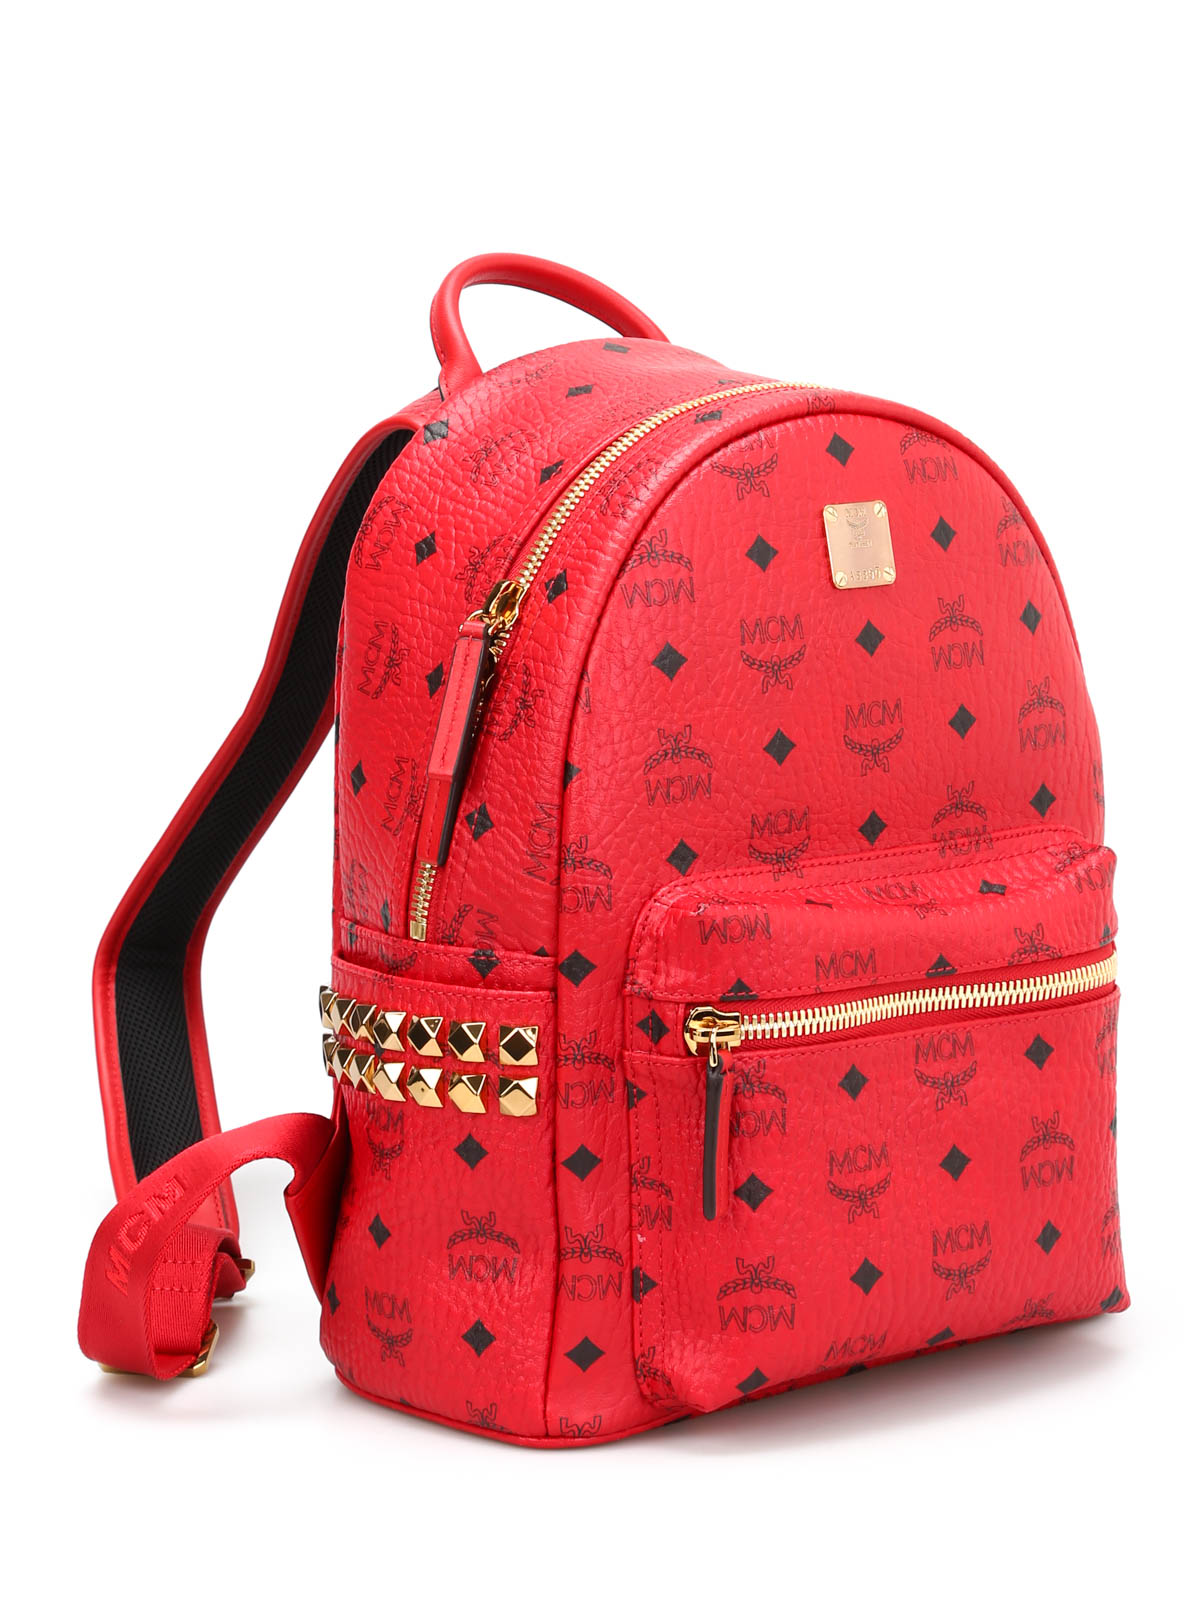 MCM Red Backpacks